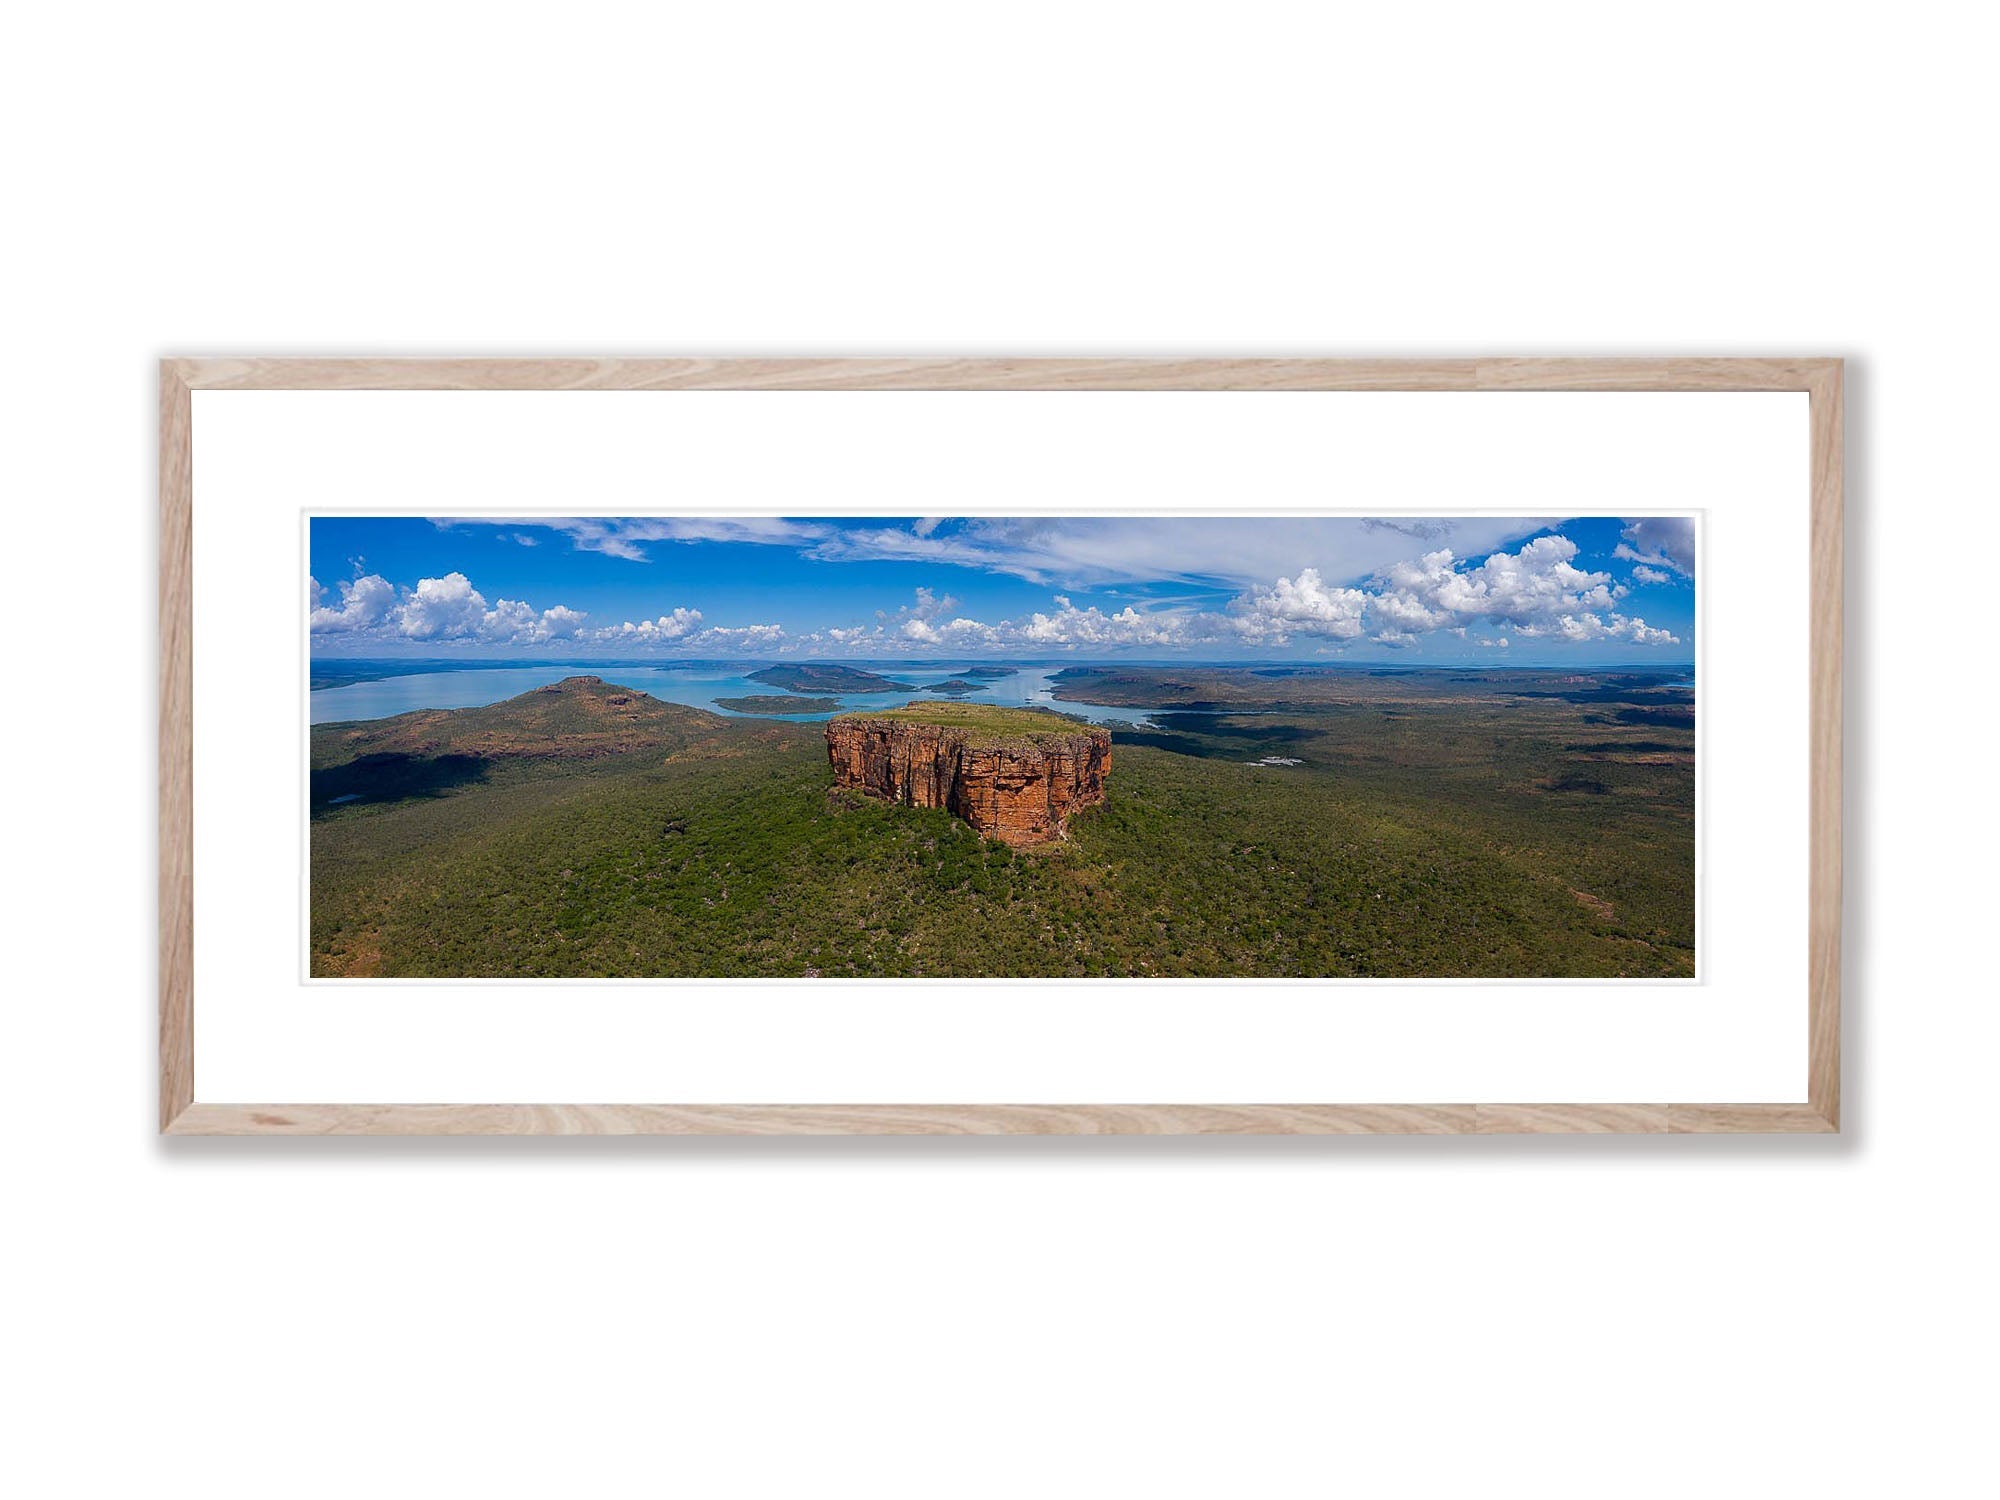 Mount Trafalgar Panorama, The Kimberley, Western Australia